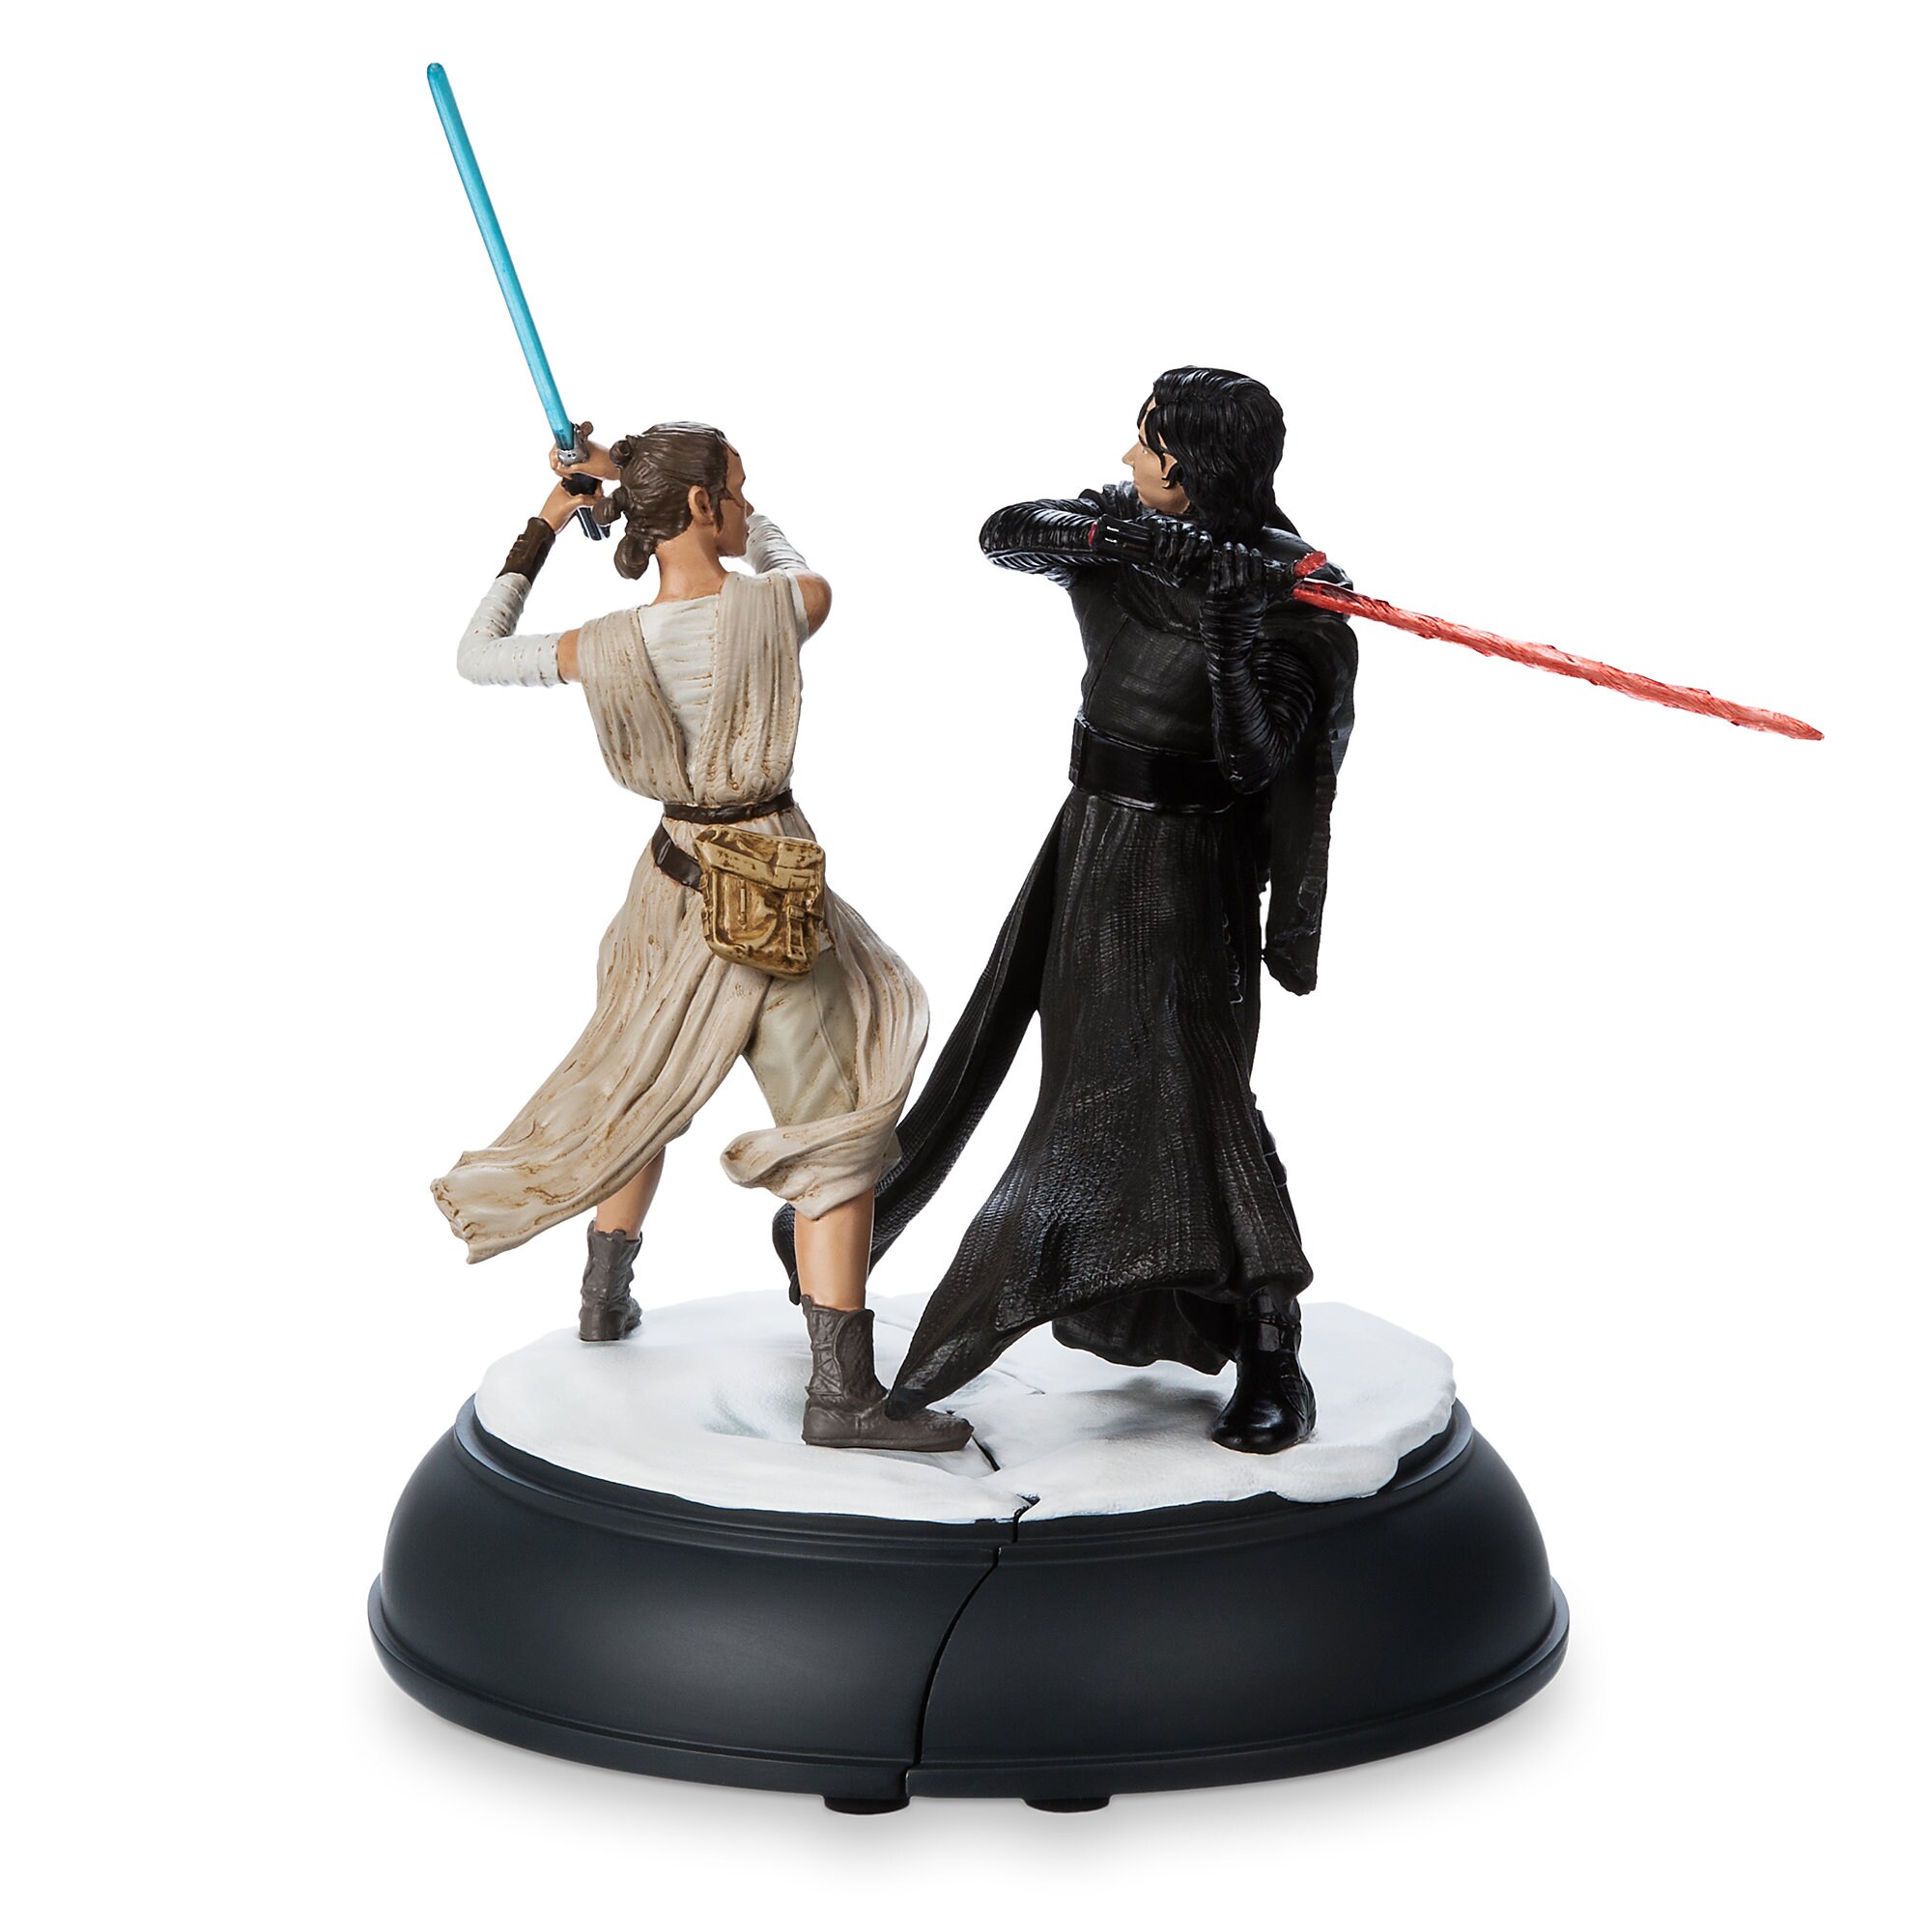 Kylo Ren and Rey Figurine Set - Star Wars: The Force Awakens